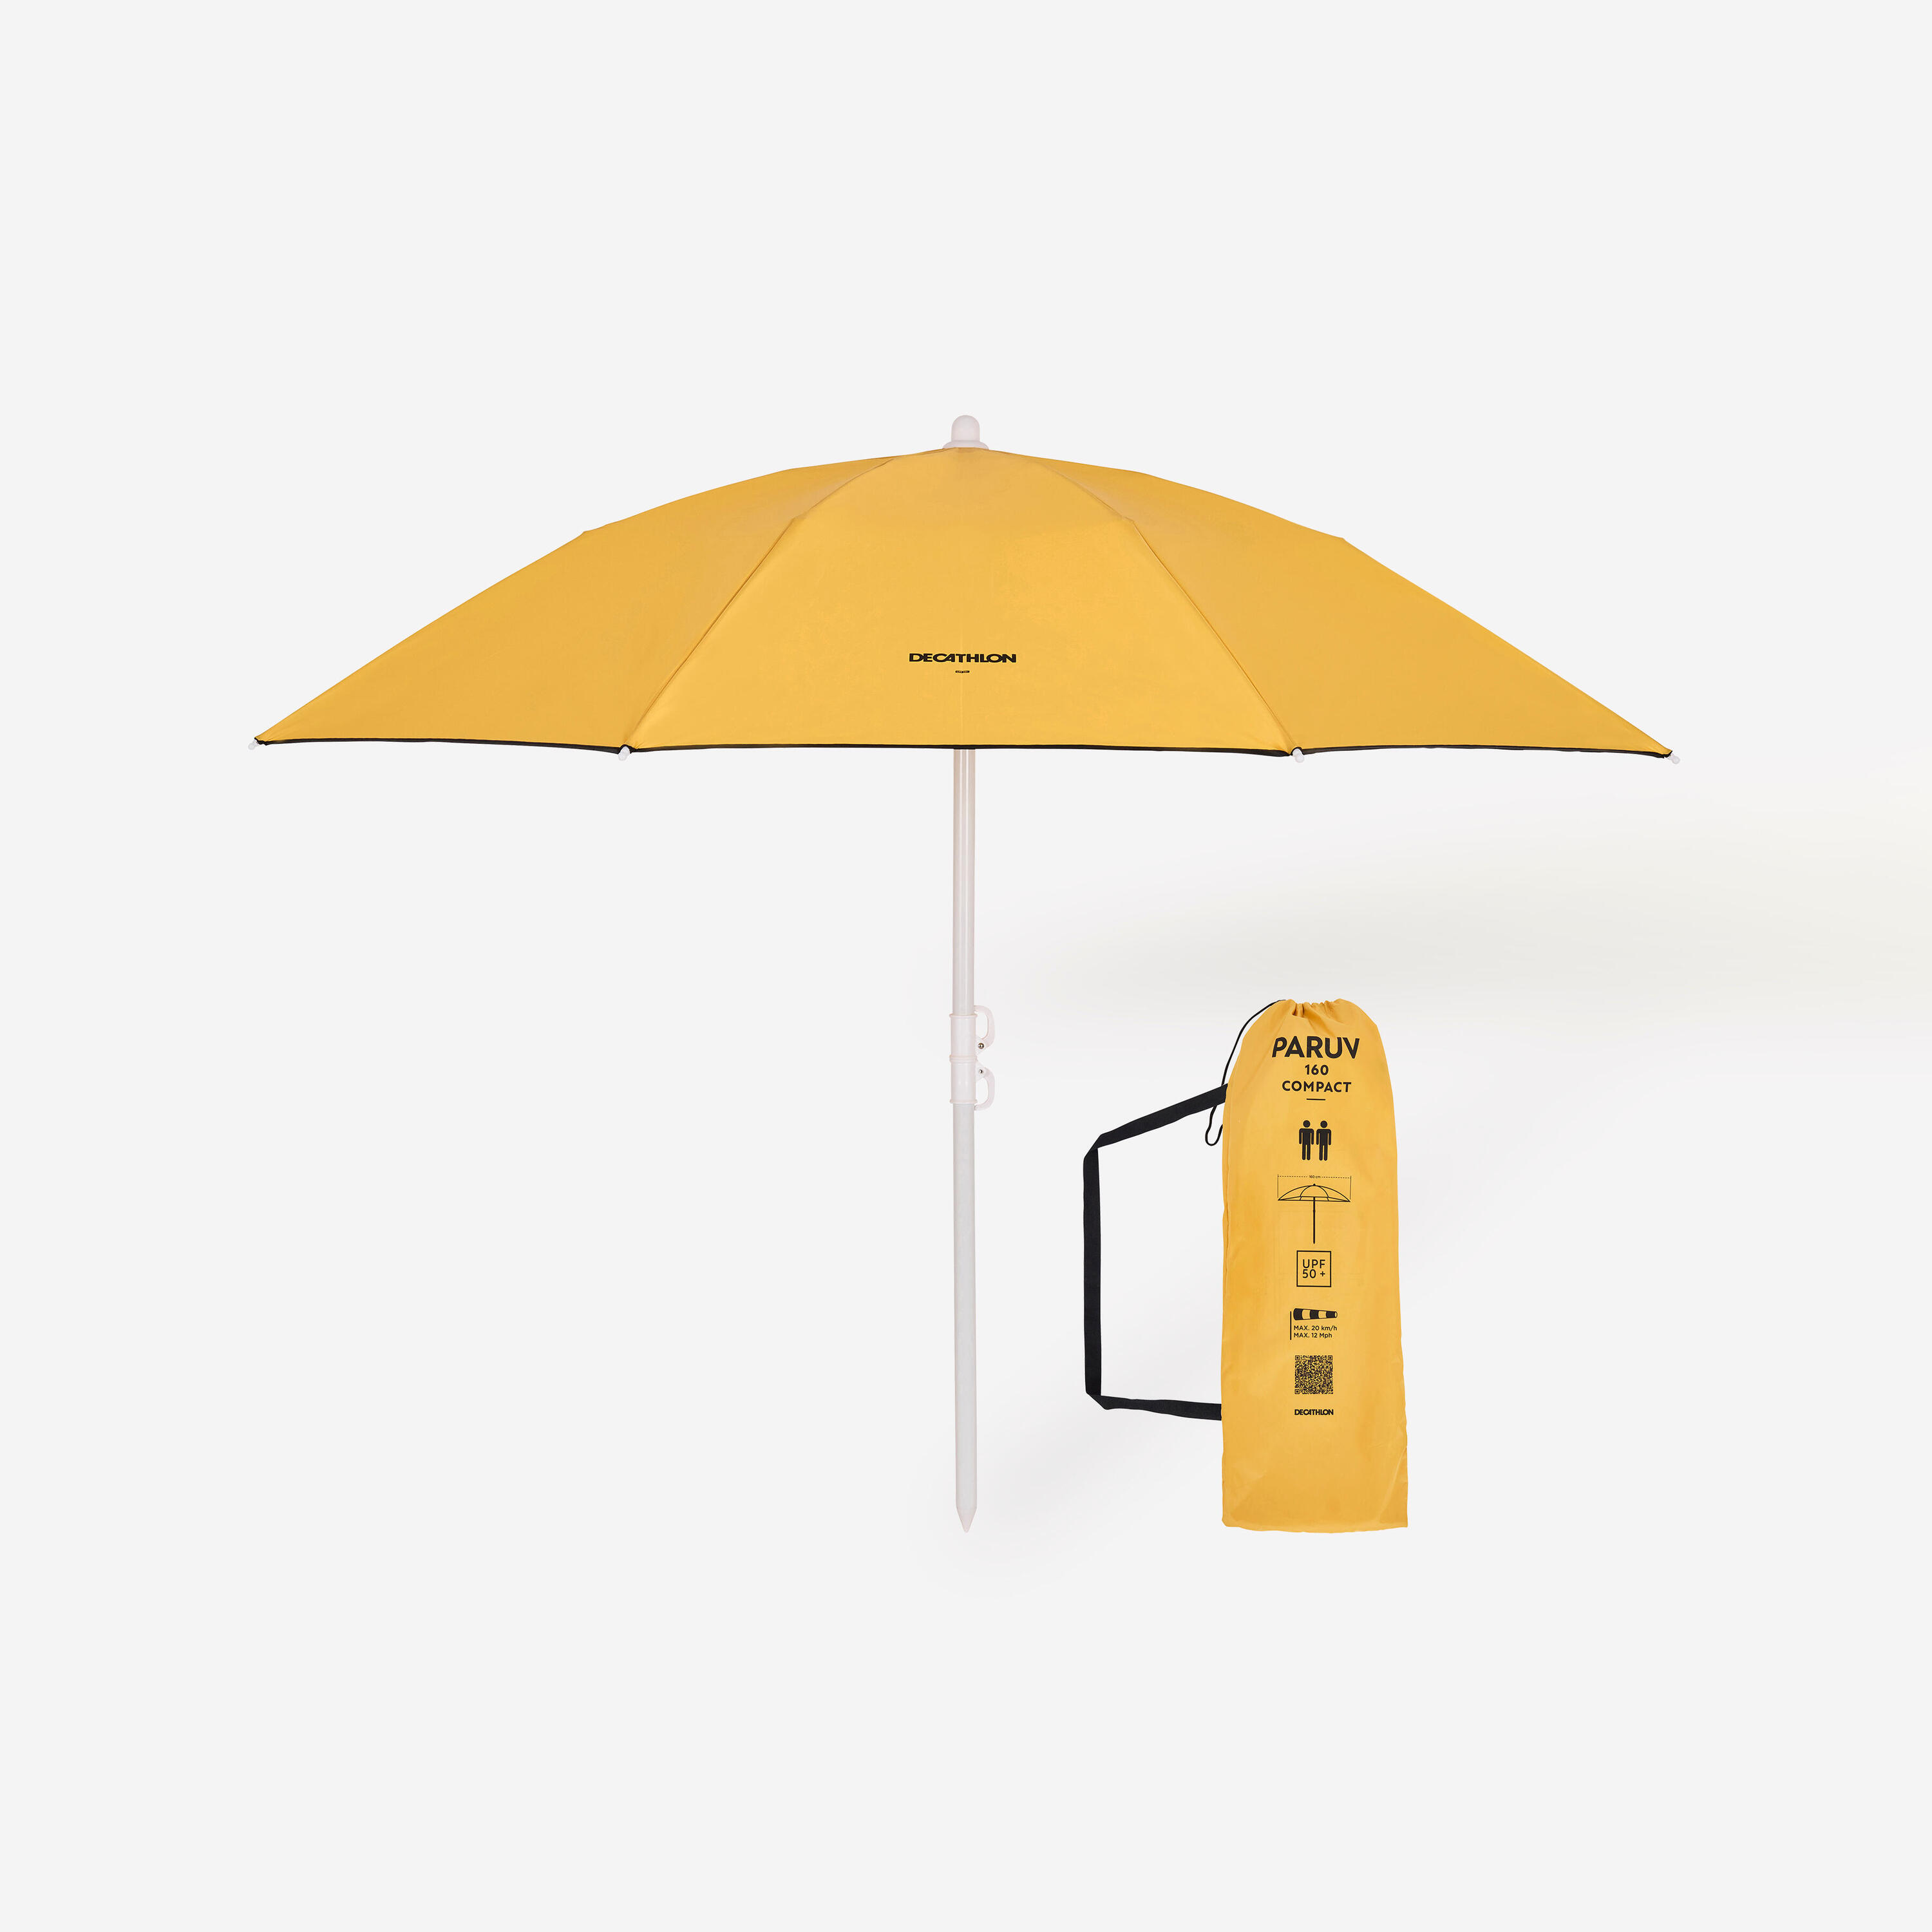 DECATHLON Compact beach umbrella 2 person UPF 50+ - Paruv 160 yellow ochre